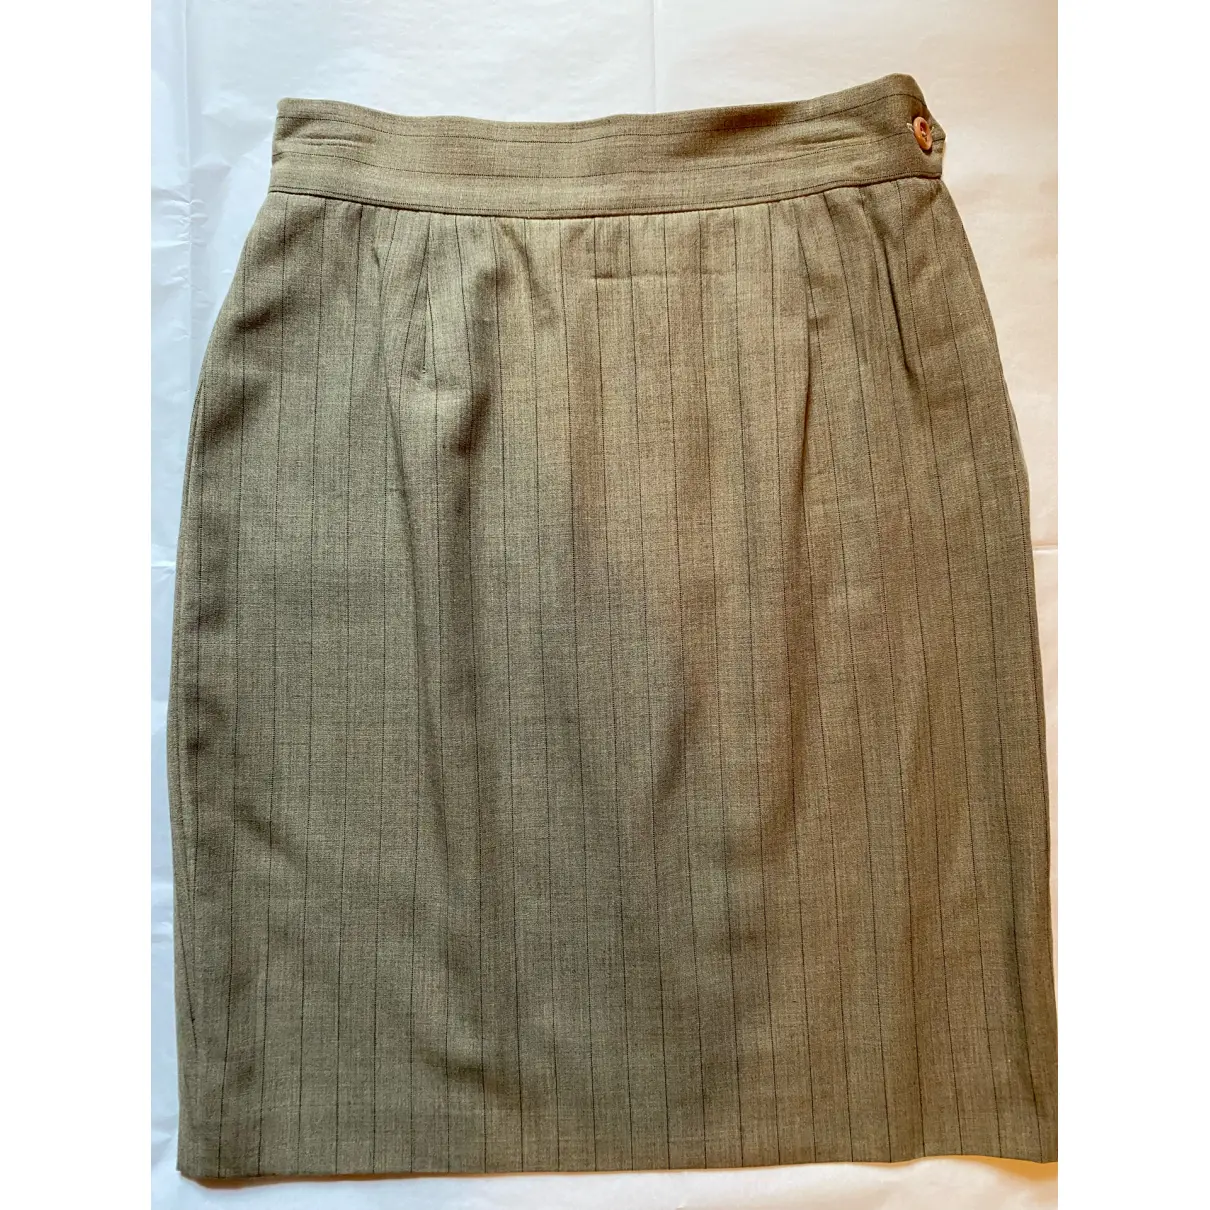 Buy Alberta Ferretti Wool skirt suit online